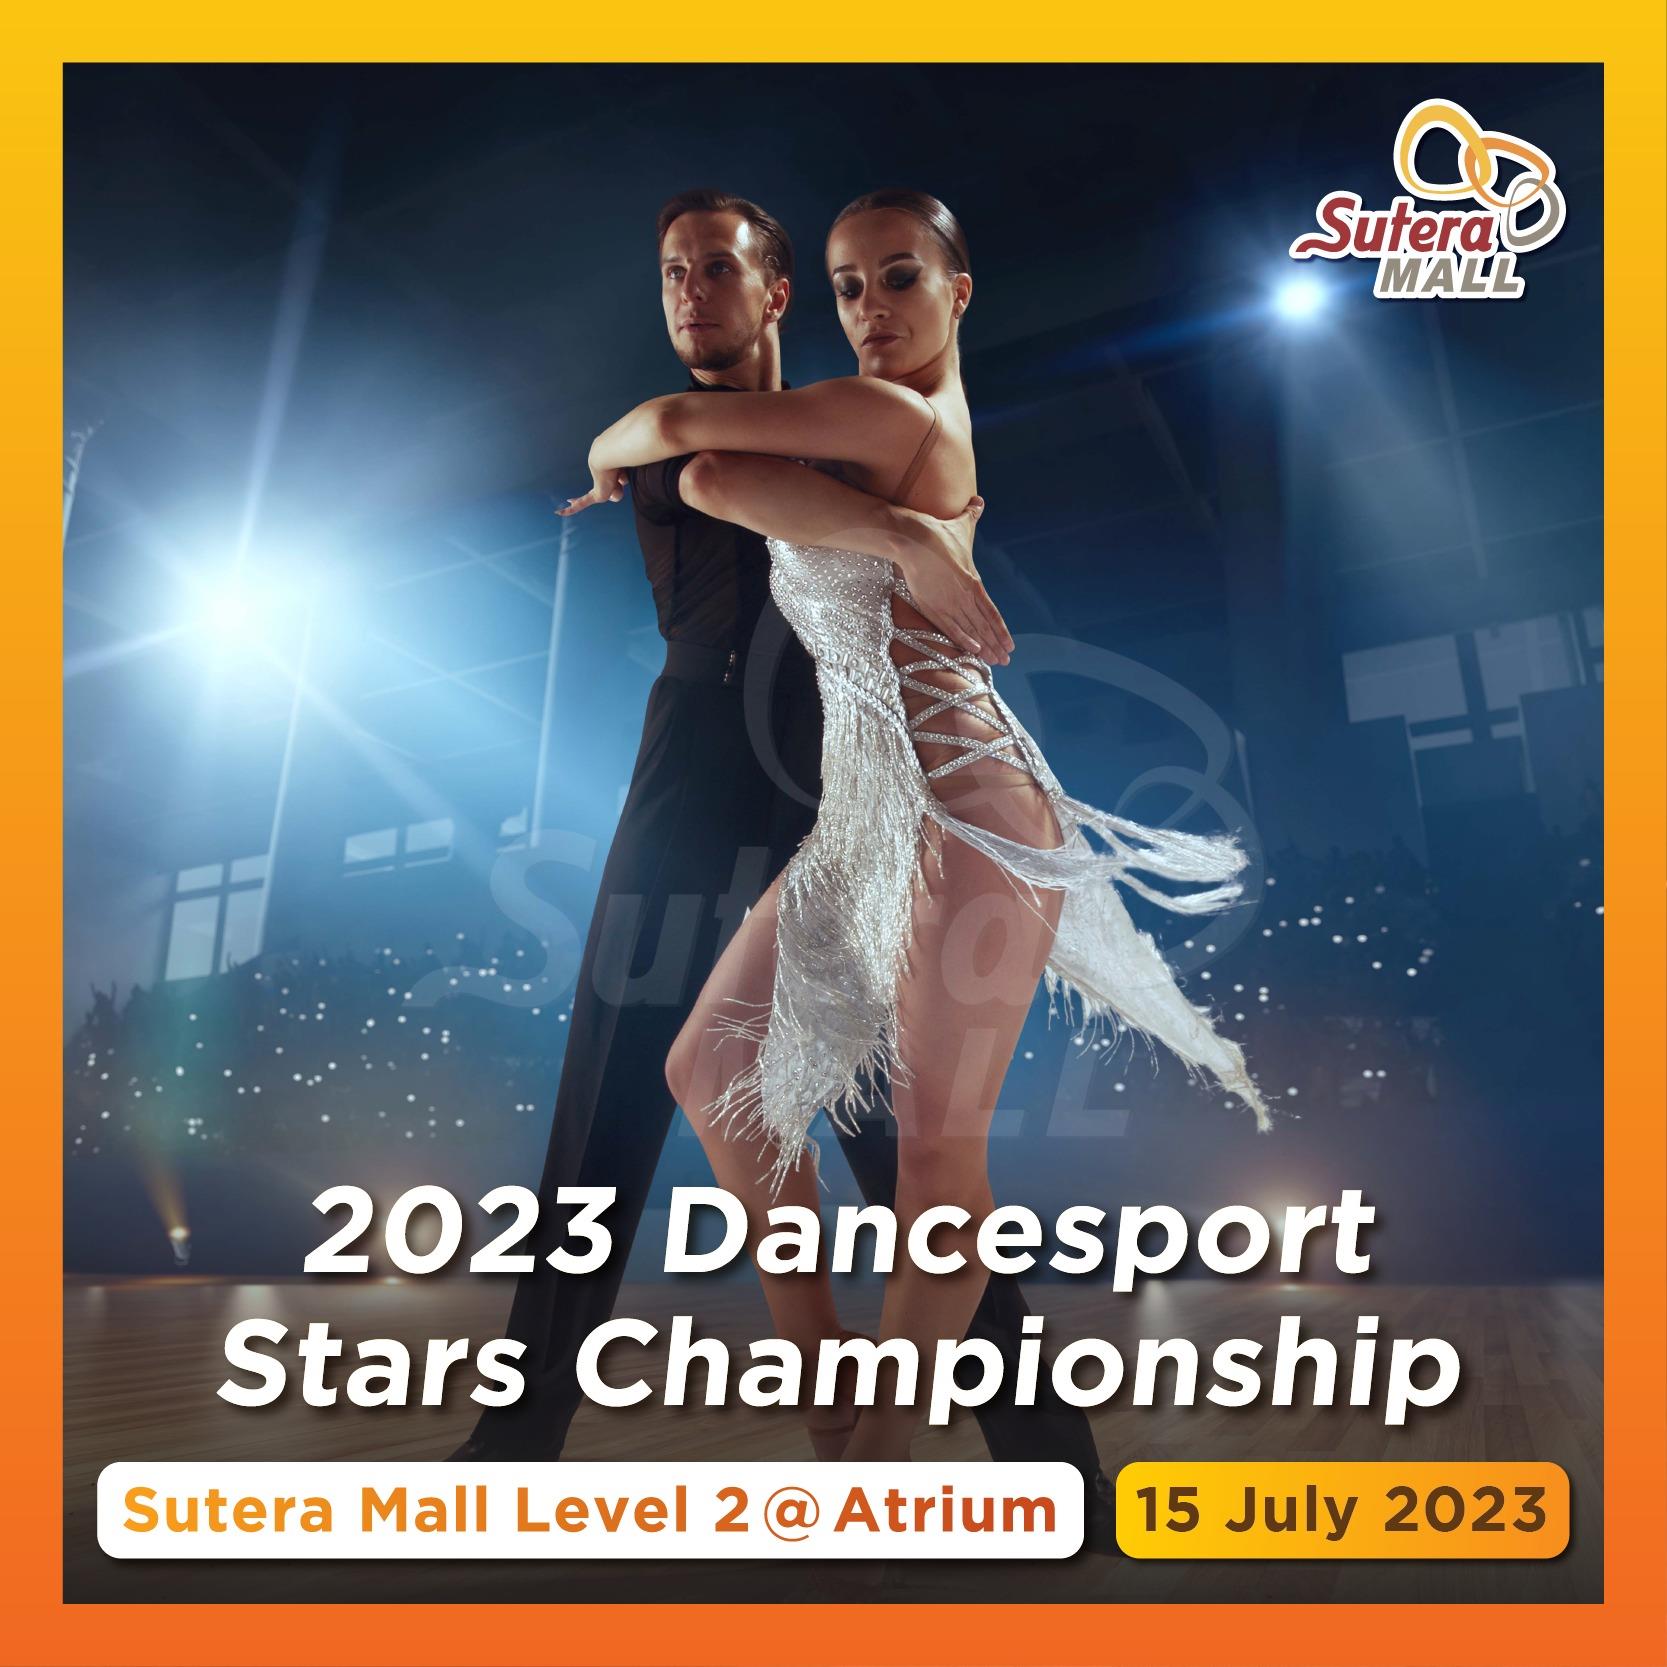 <div class='event-date'>15 Jul 2023</div><div class='event-title'><h4>2023 Dancesport Stars Championship</h4></div>